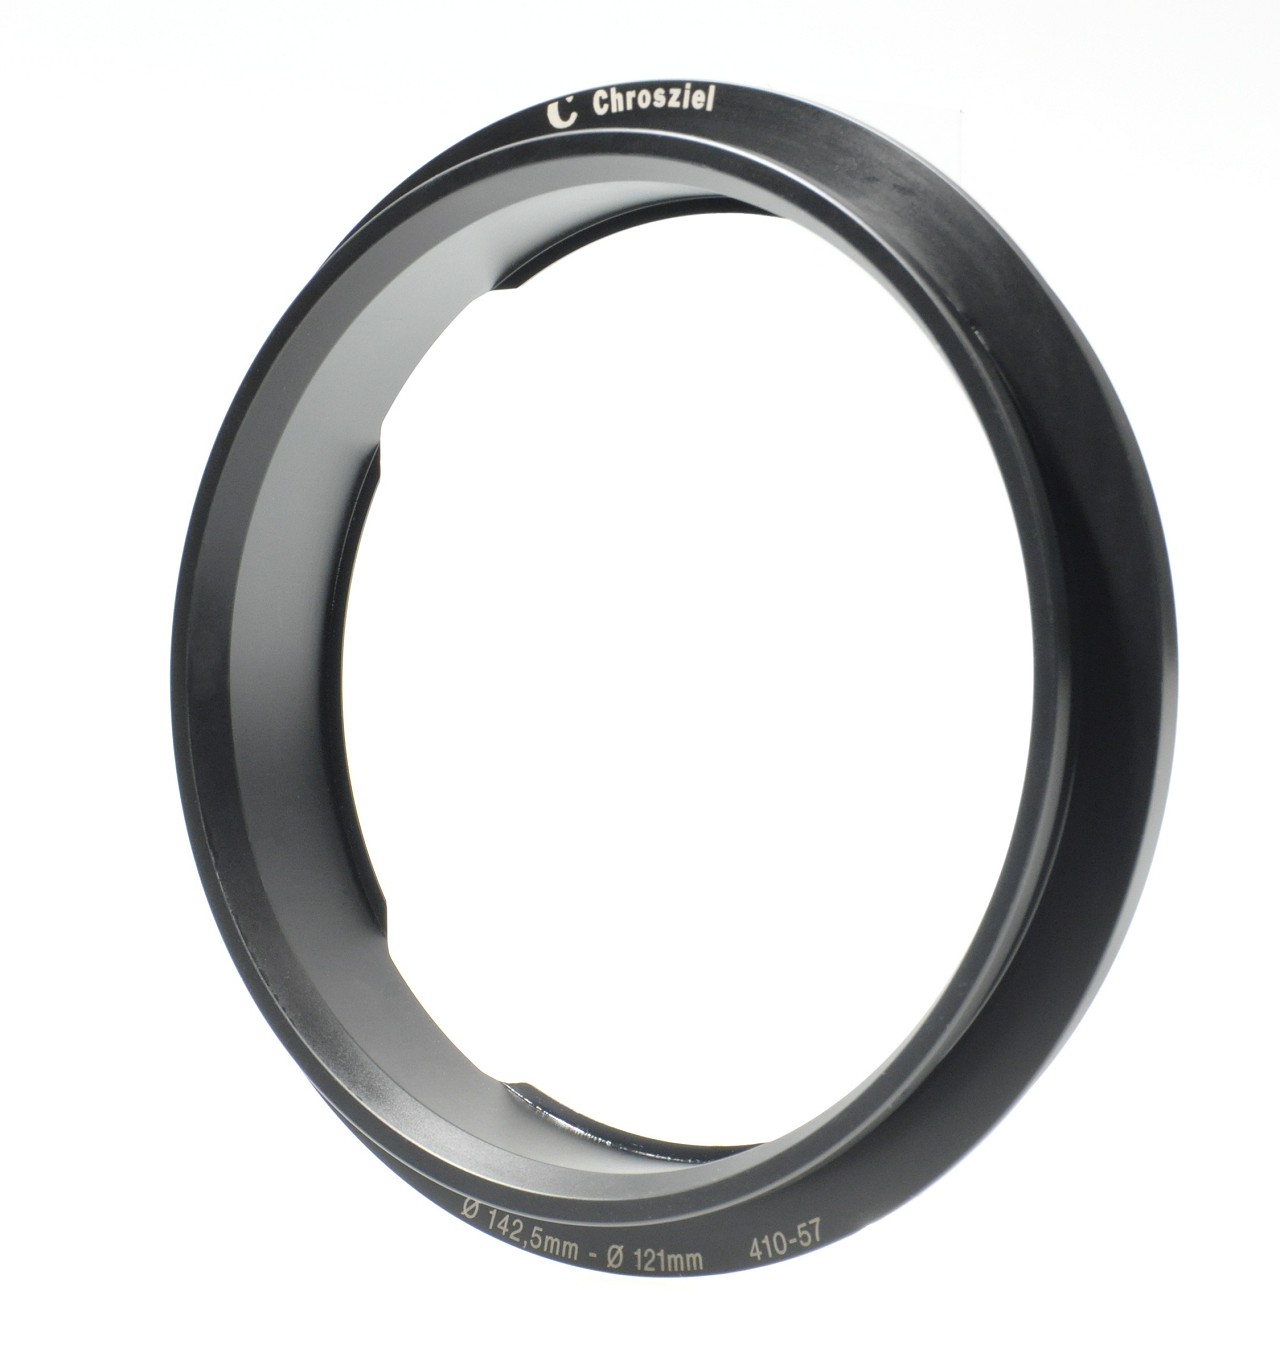 Retaining Ring Ø 142,5:121 mm